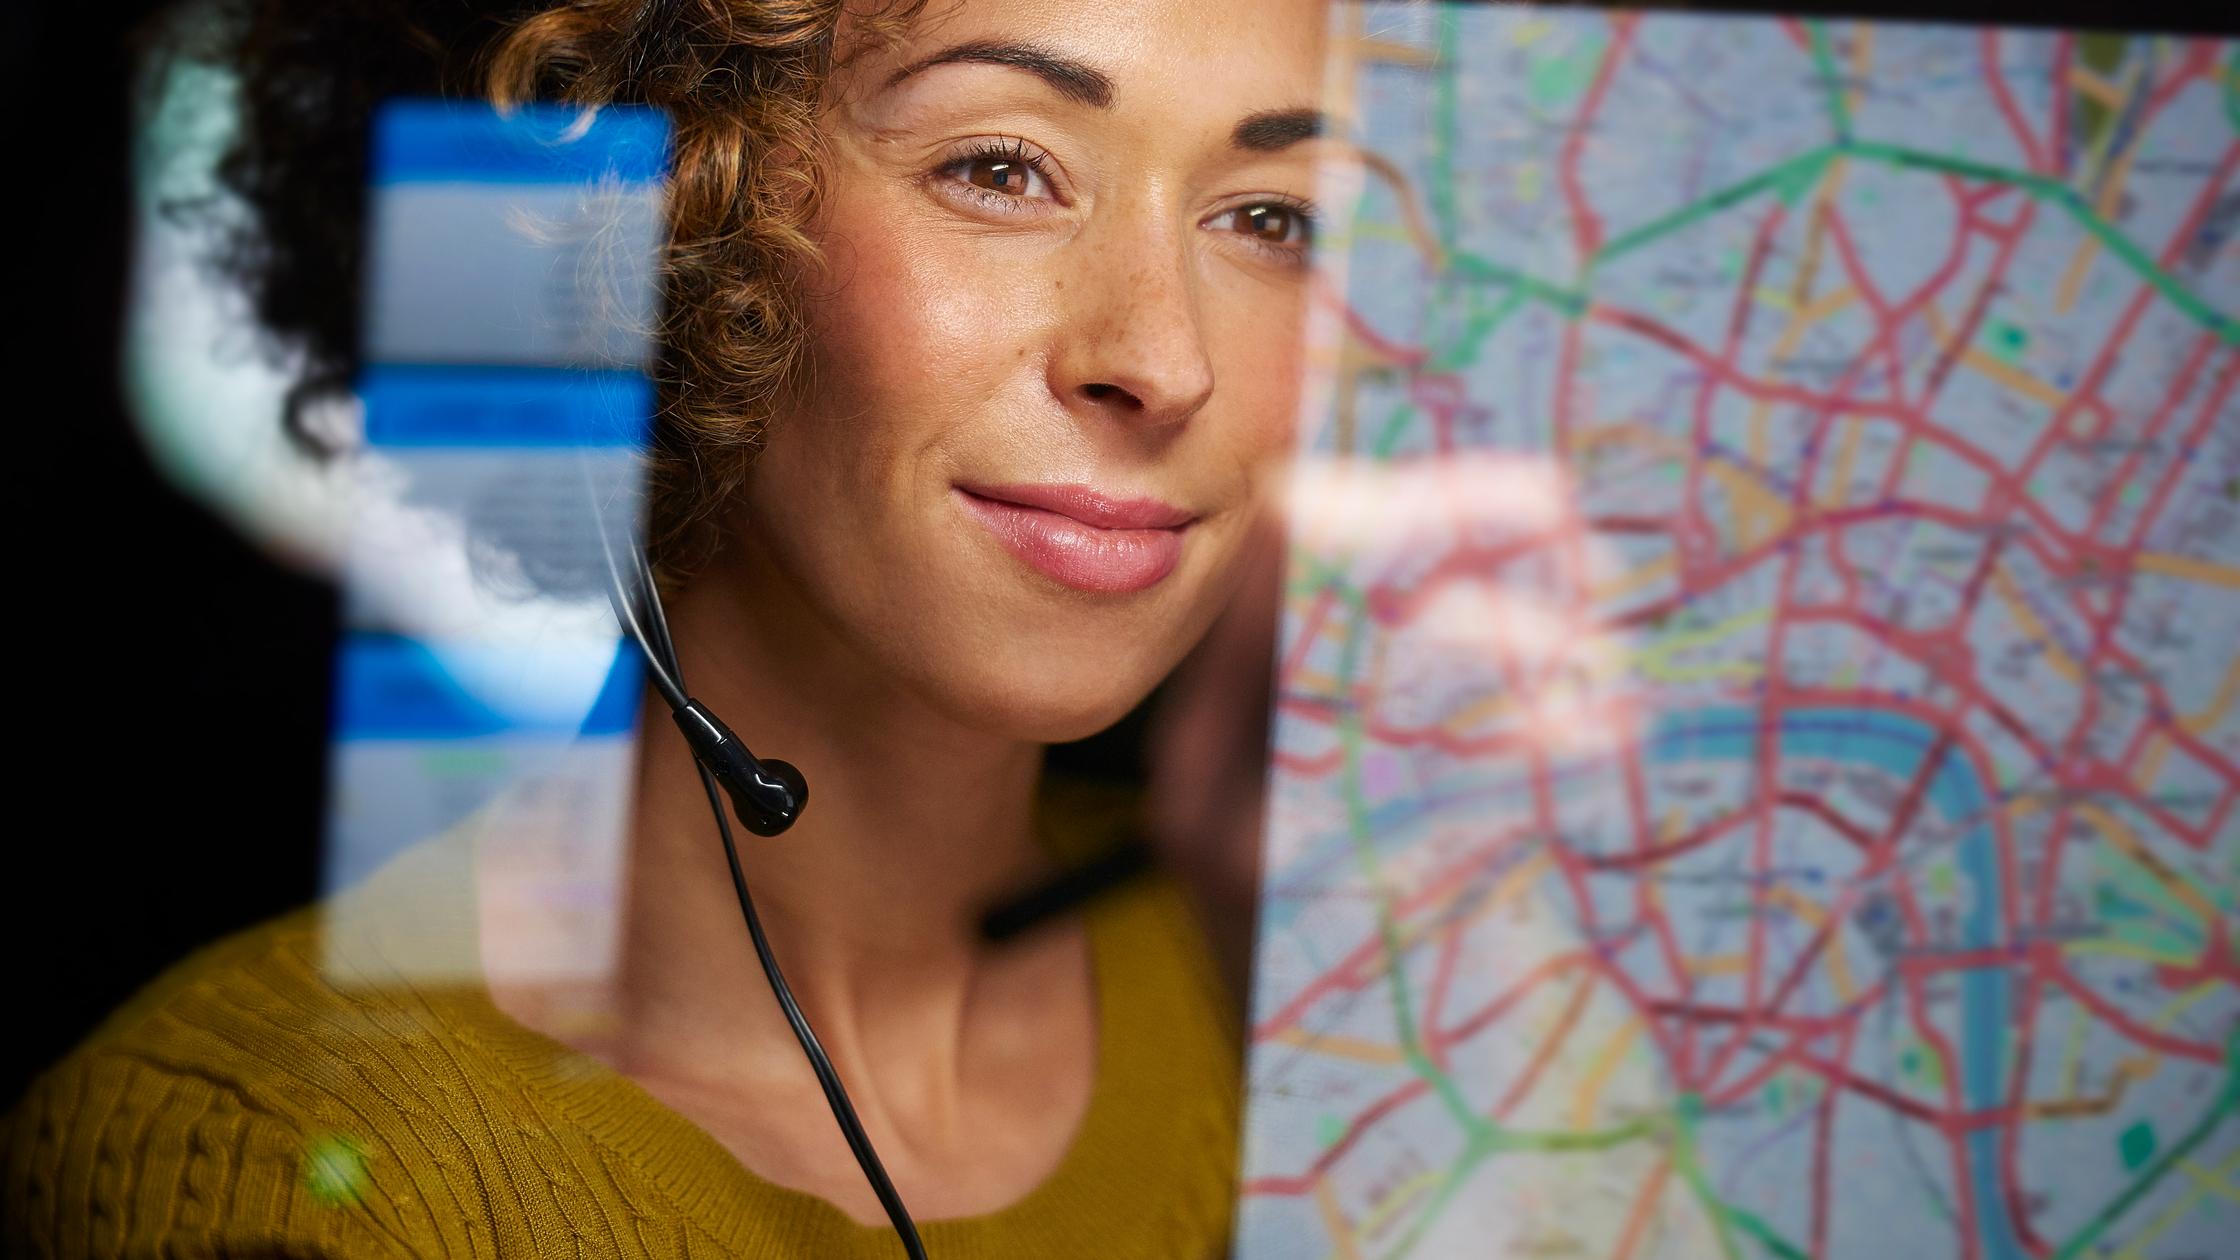 Digital trust : woman watching map on screen